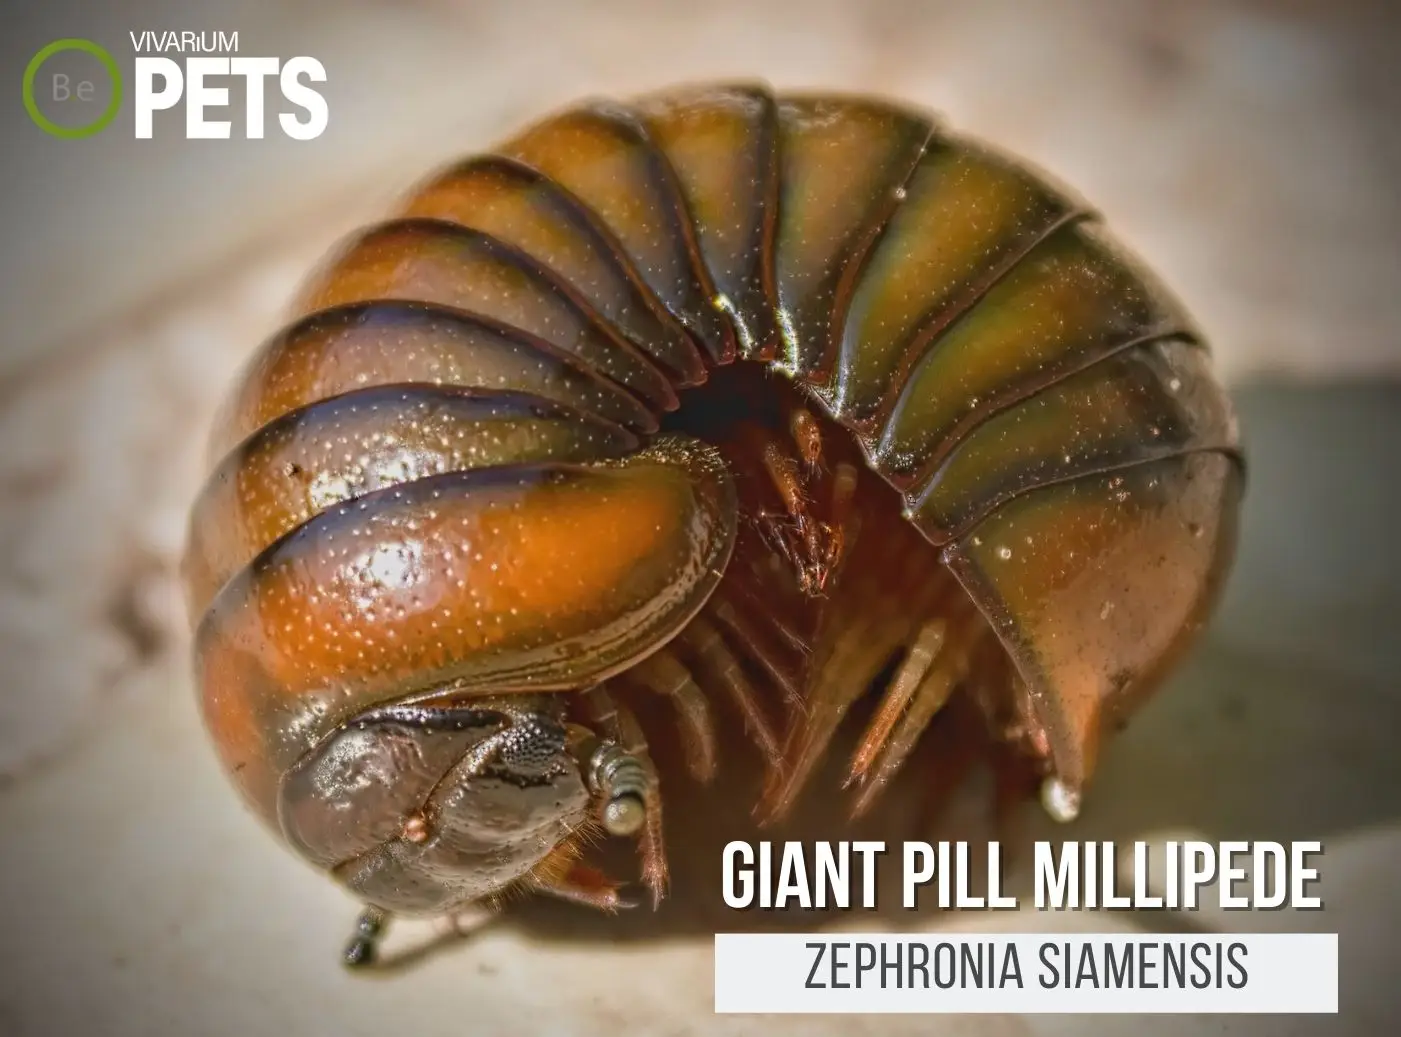 Zephronia siamensis "Giant Pill Millipede" Care Guide